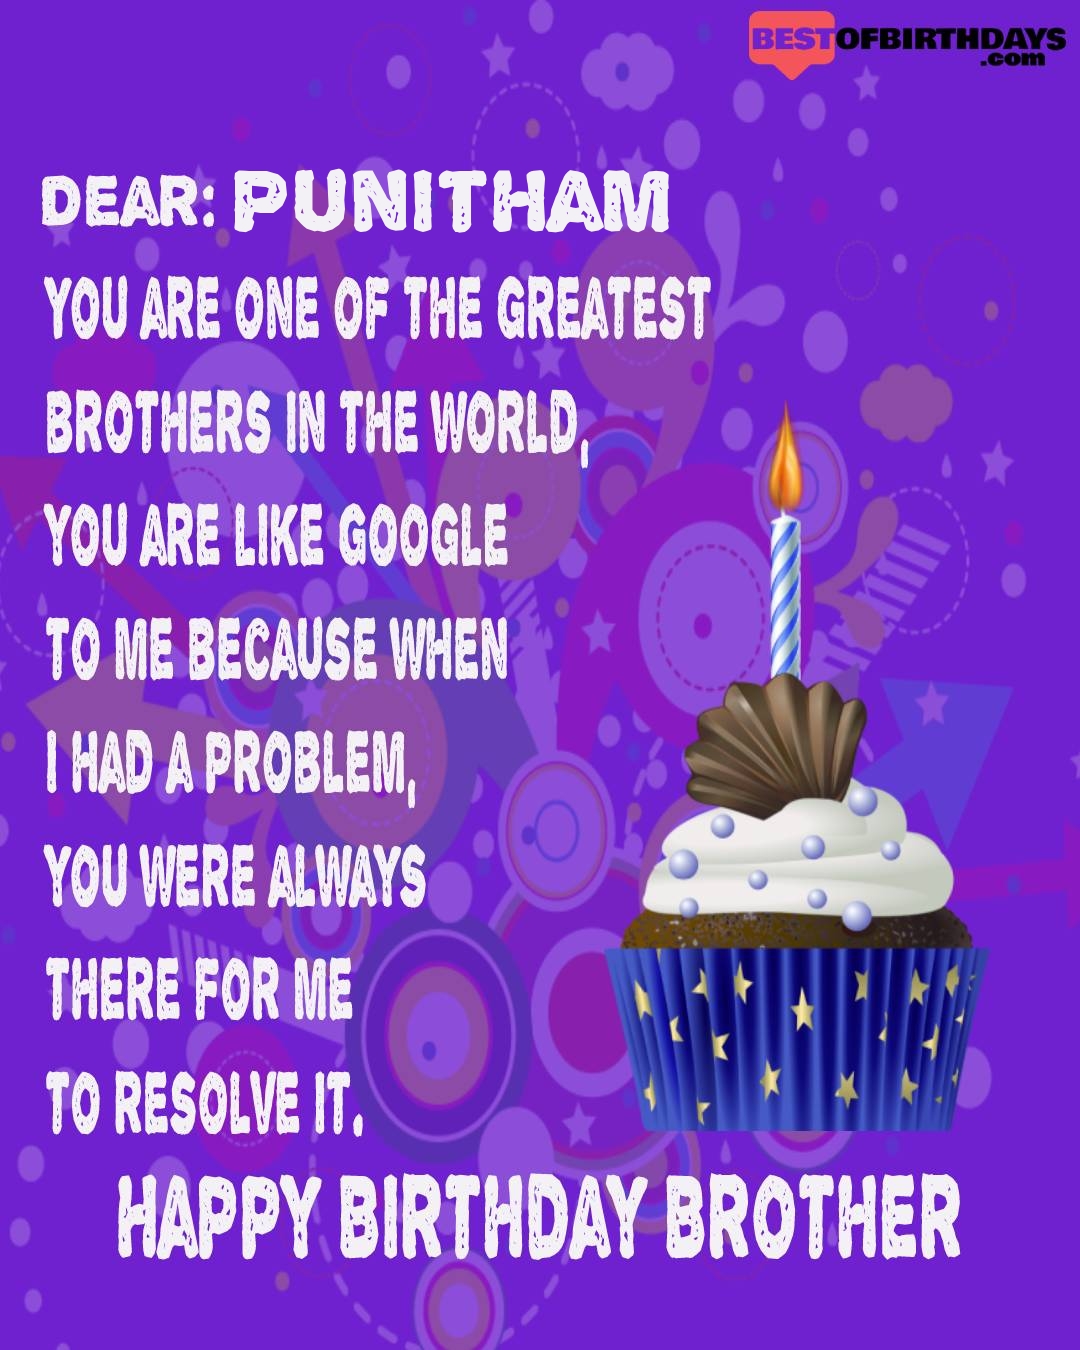 Happy birthday punitham bhai brother bro